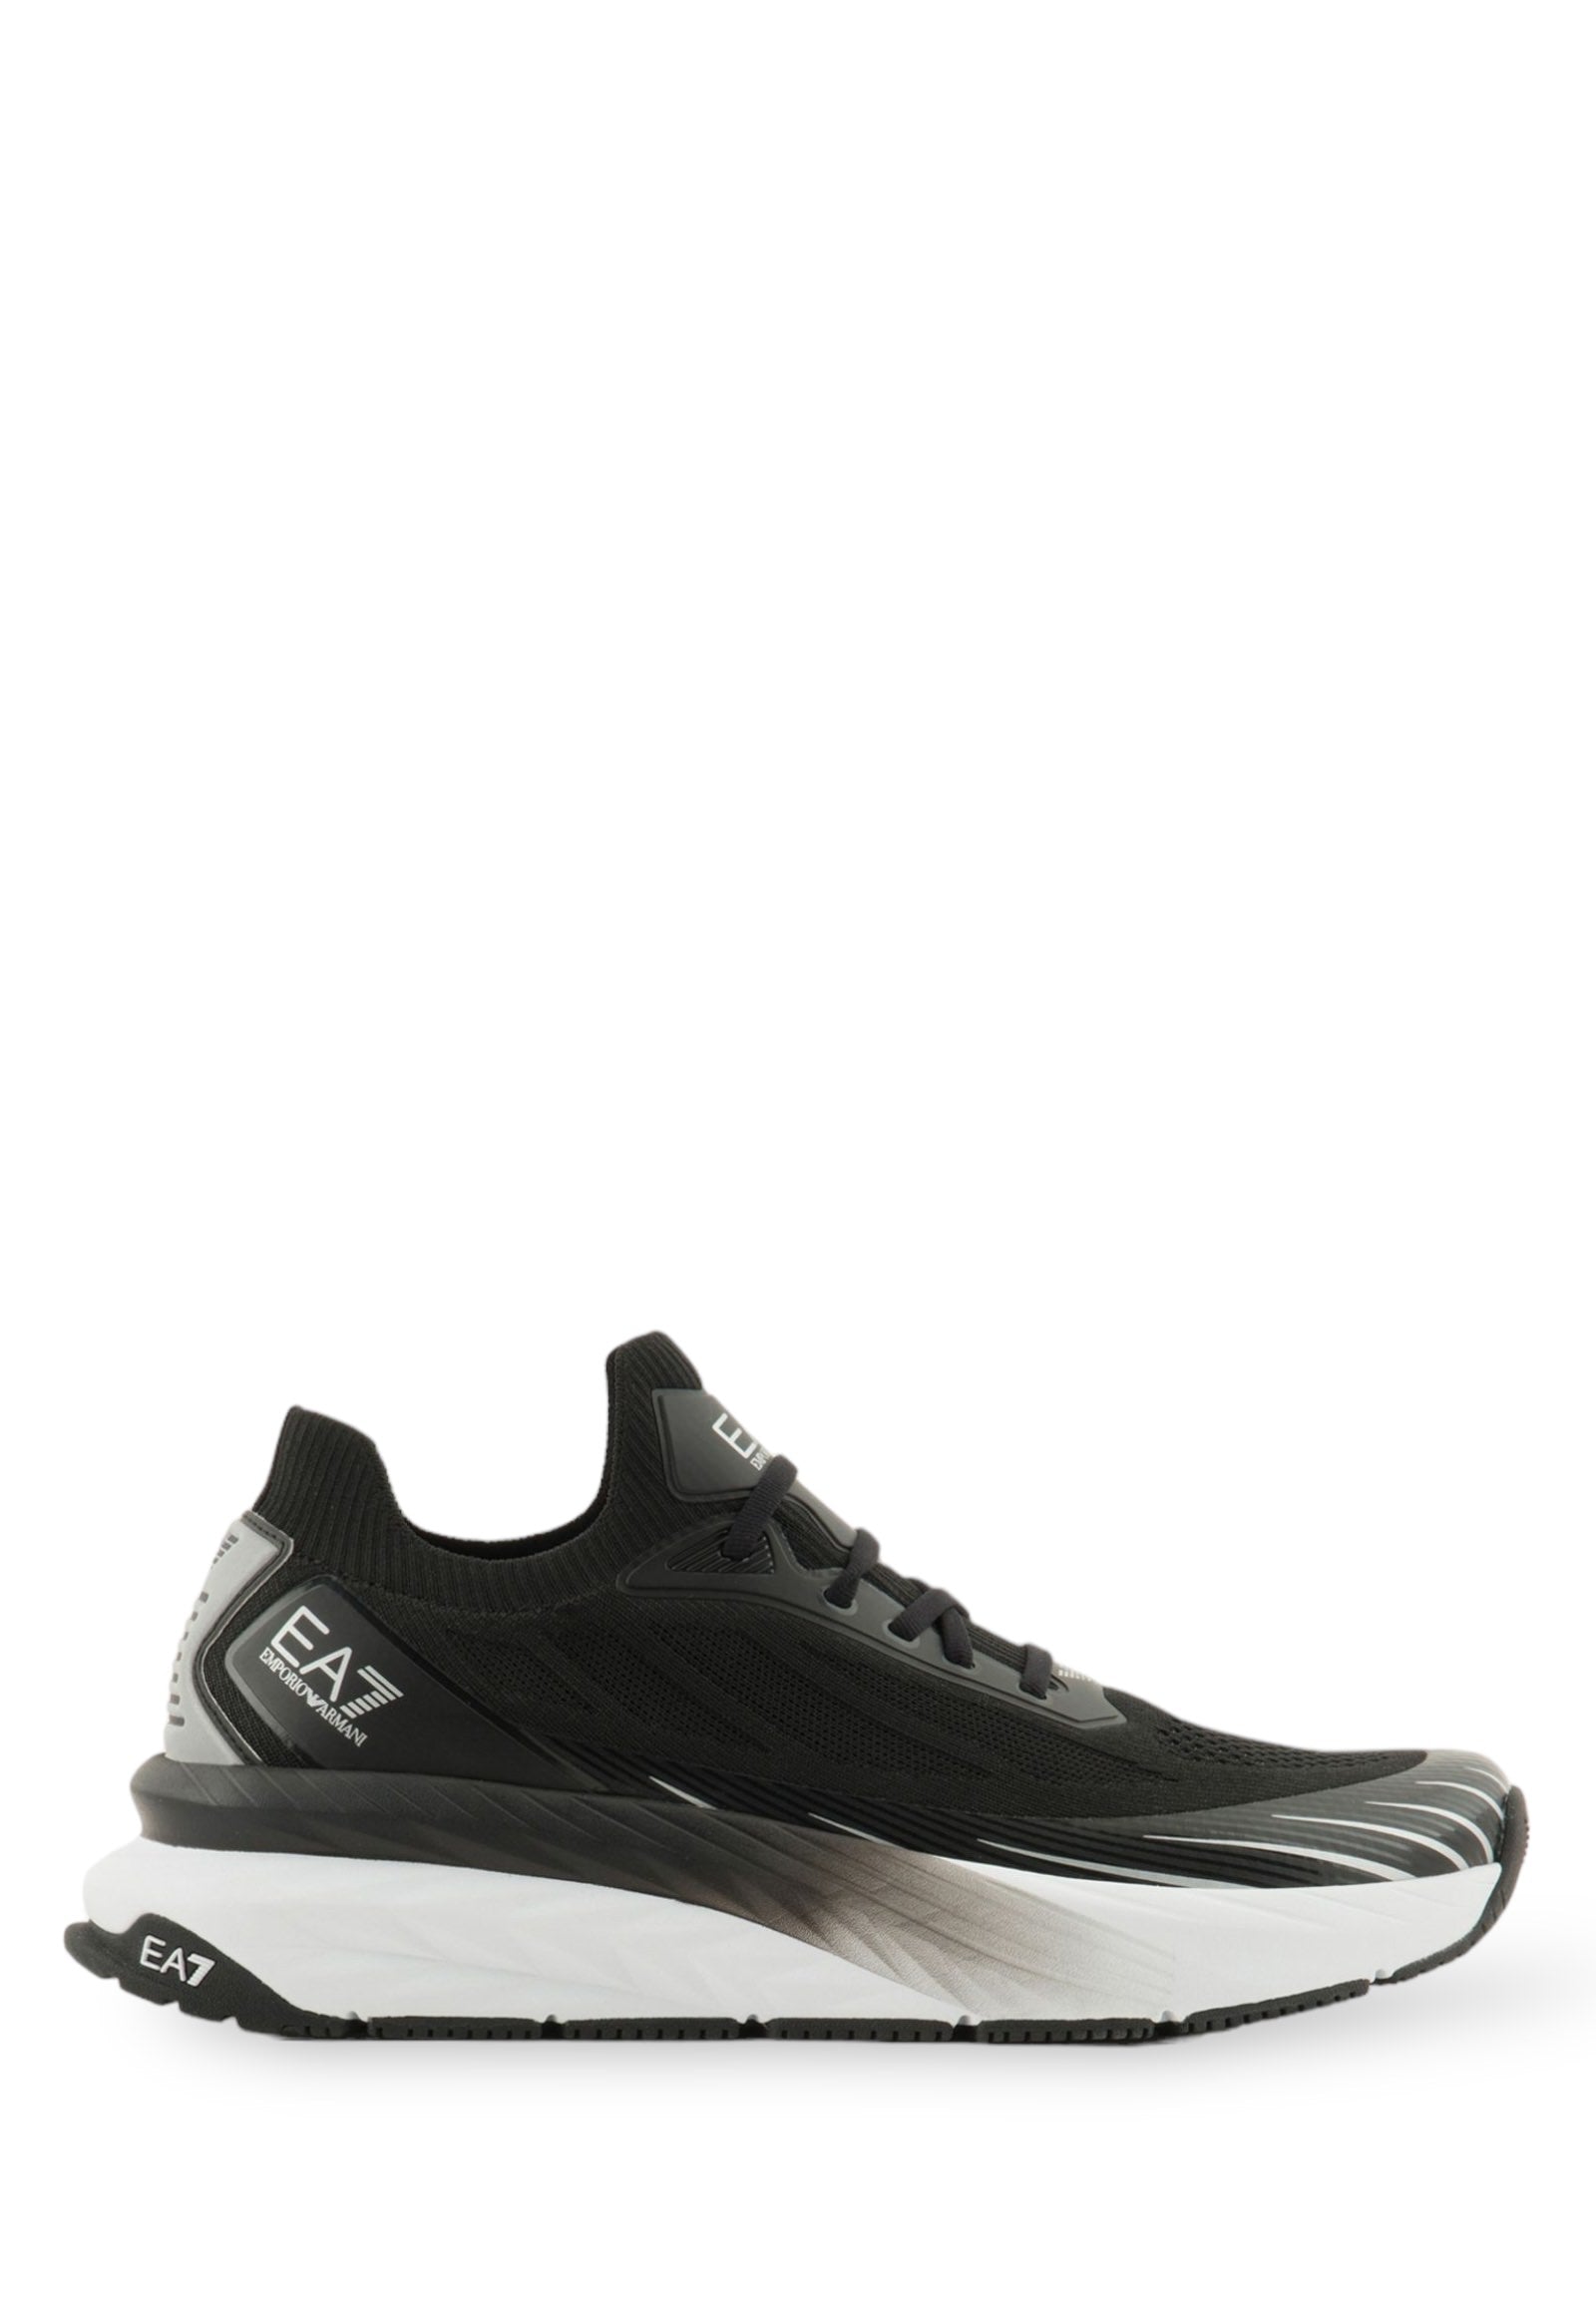 Ea7 Emporio Armani Sneakers X8x176 Black, Silver